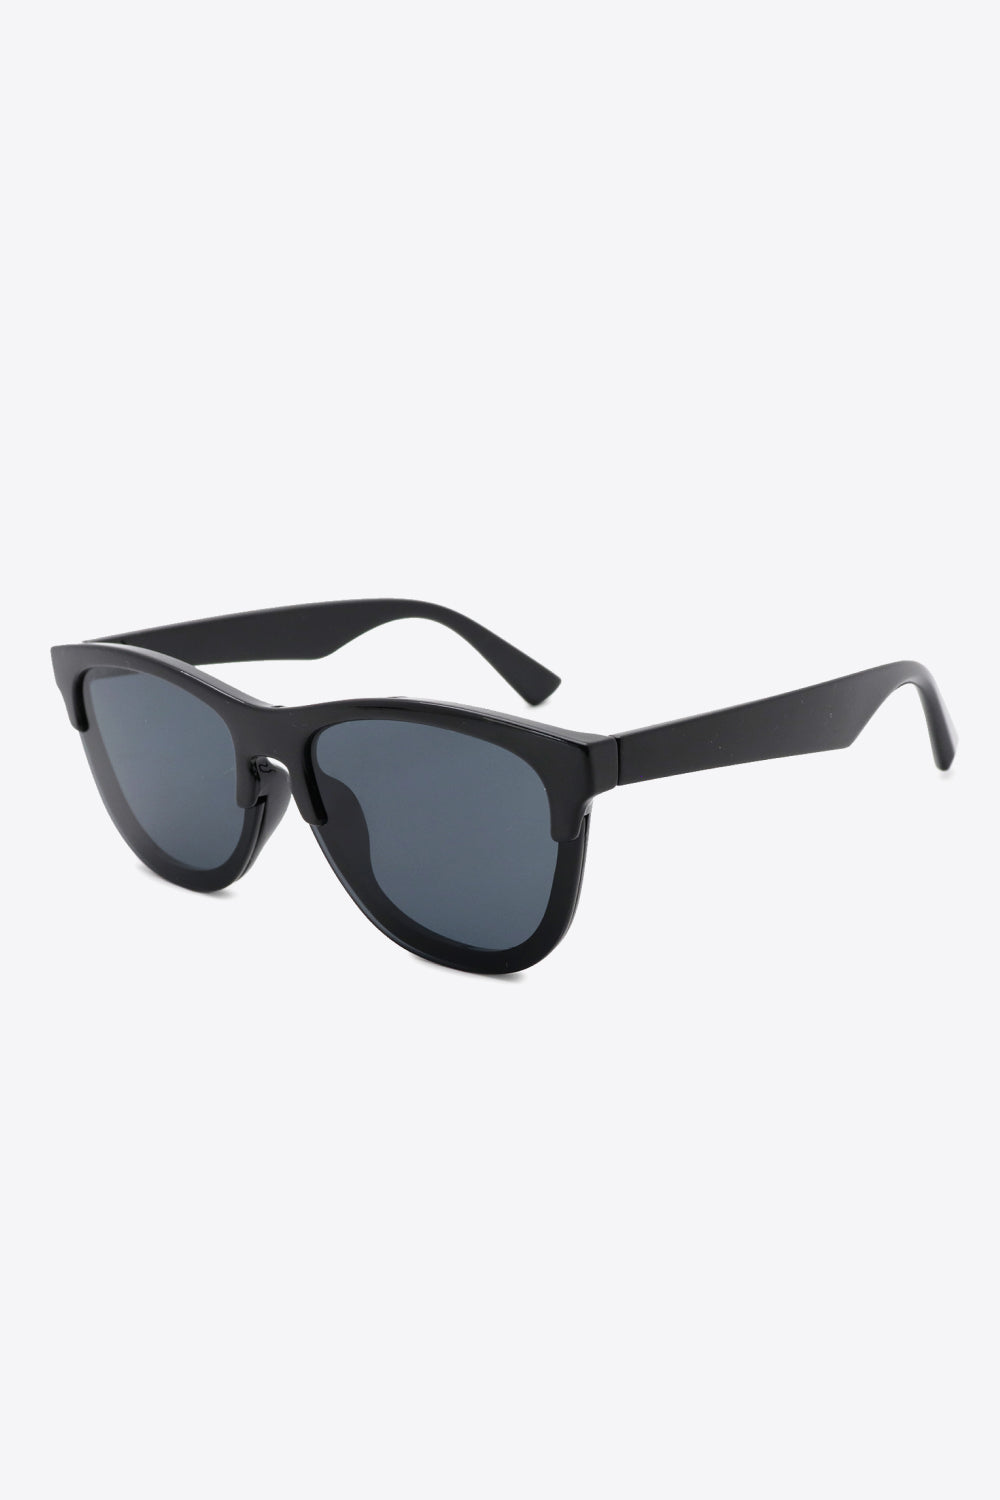 UV400 Browline Wayfarer Sunglasses - BEAUTY COSMOTICS SHOP